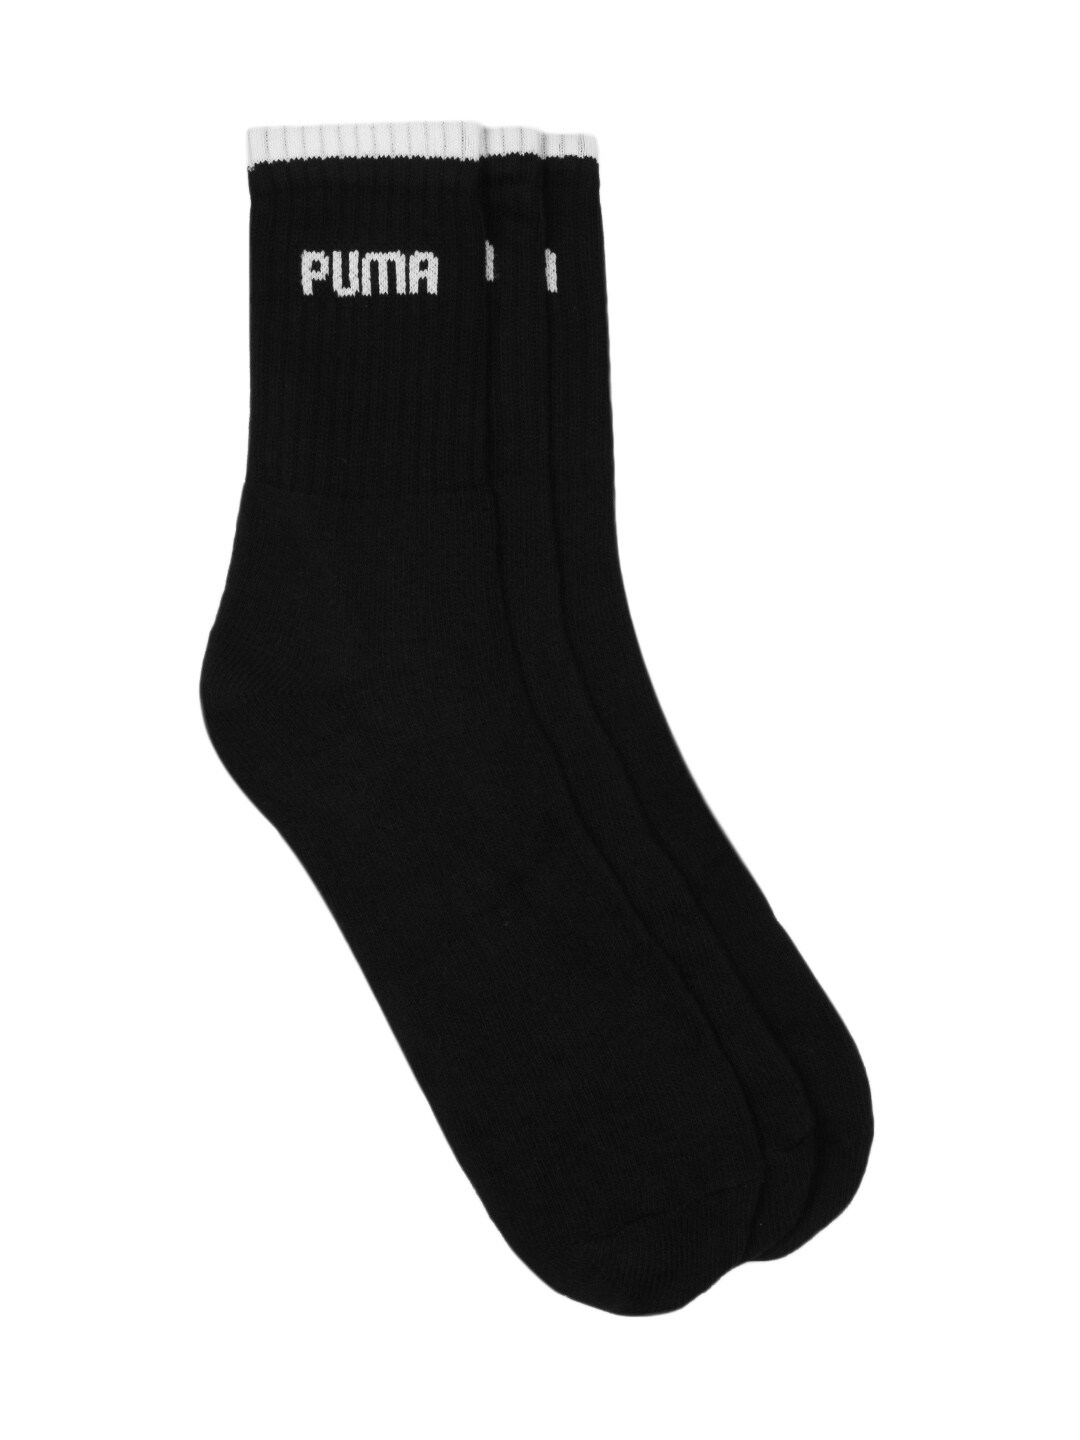 Puma Men Black Pack of 3 Socks